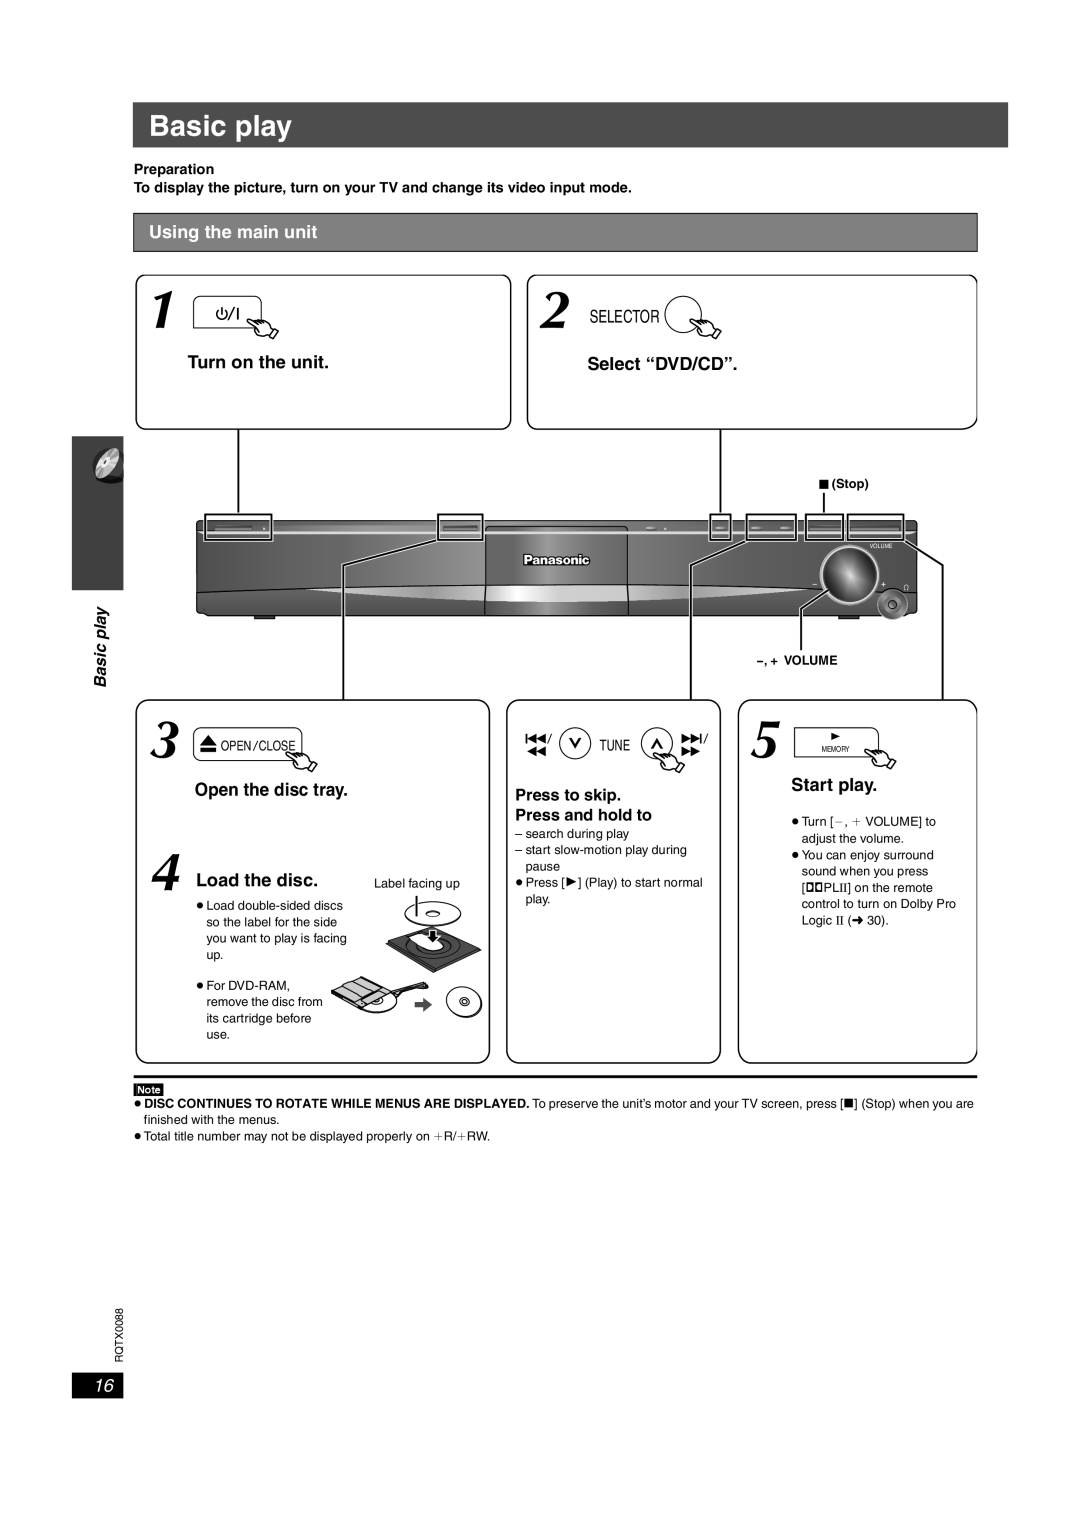 Panasonic sc-pt460 Basic play, Using the main unit, Selector, Turn on the unit, Select “DVD/CD”, Press to skip, Open Close 